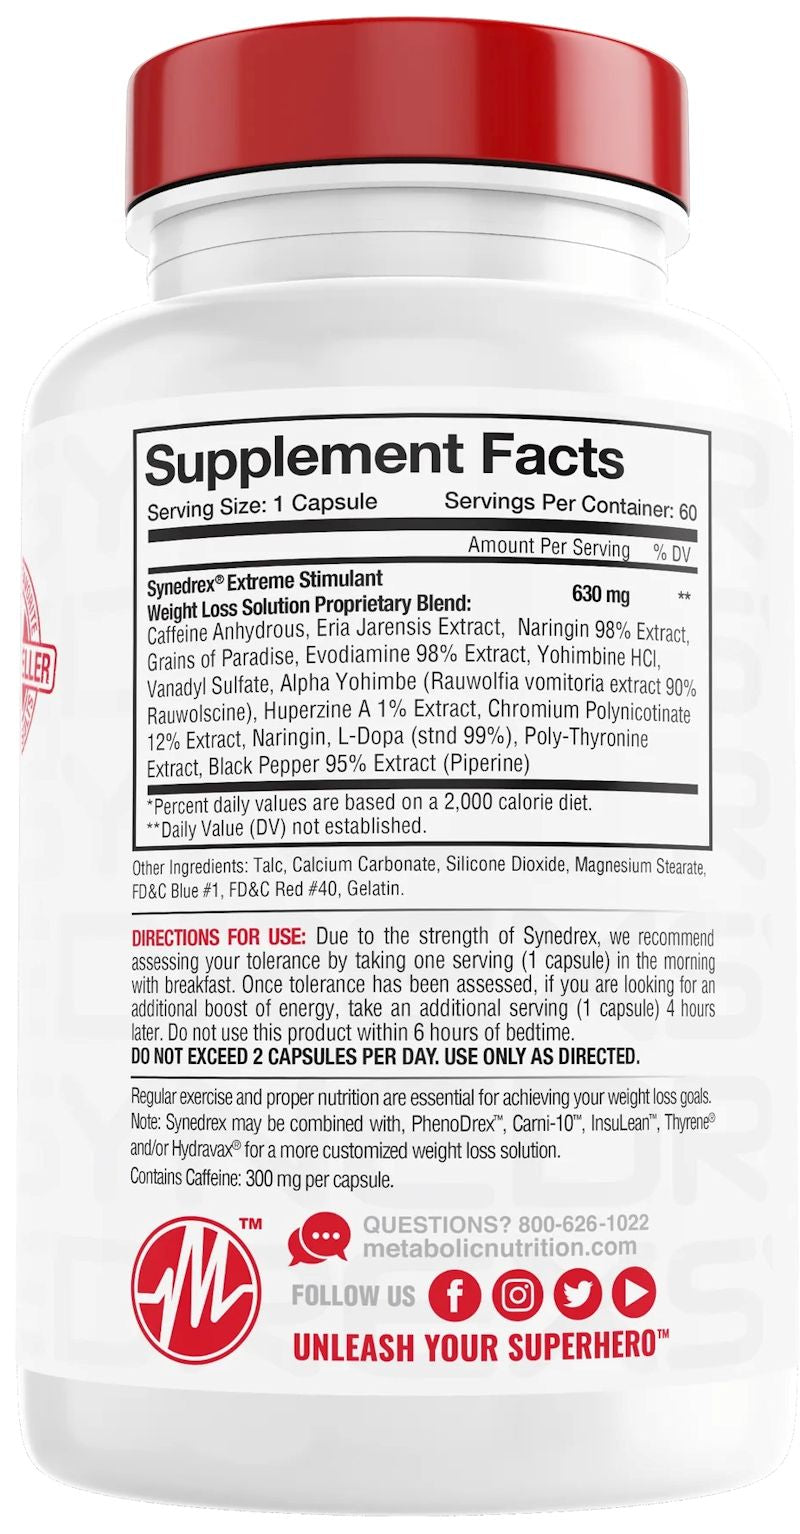 Synedrex Metabolic Nutrition 60 caps back